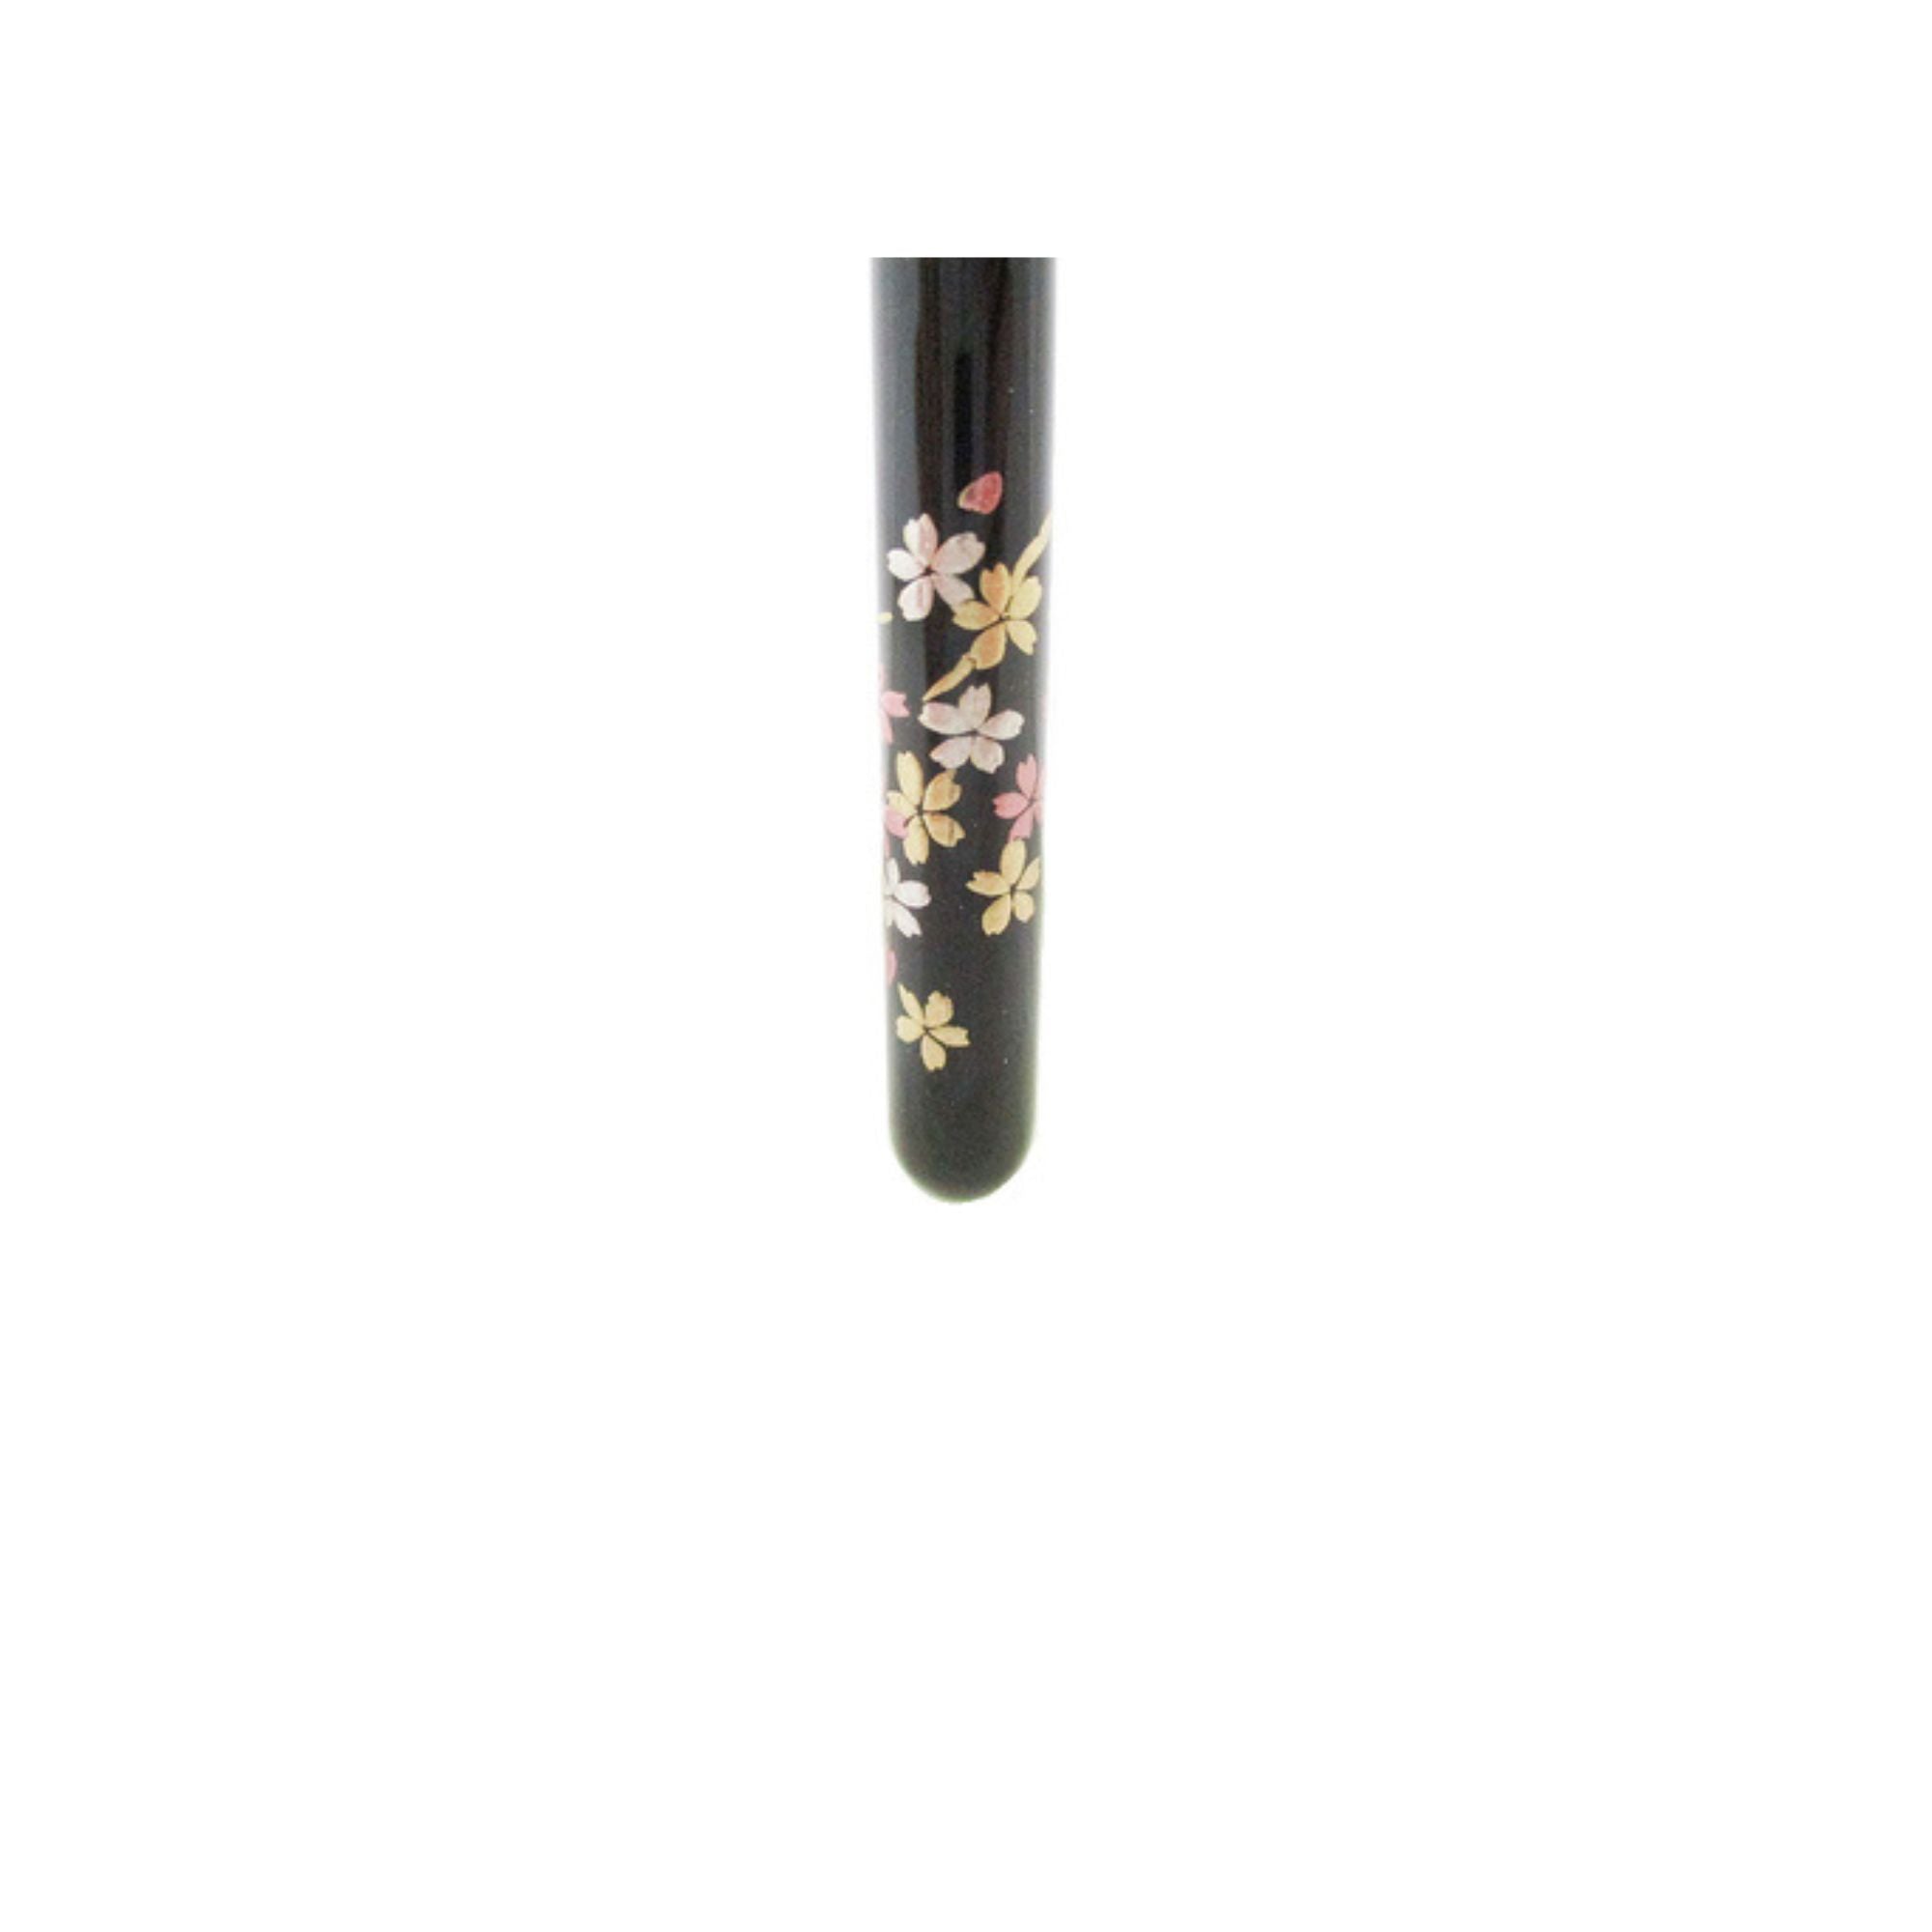 Eihodo Makie Eyeshadow Brush Sakura 小桜 – Red, Black Handles (Limited) - Fude Beauty, Japanese Makeup Brushes